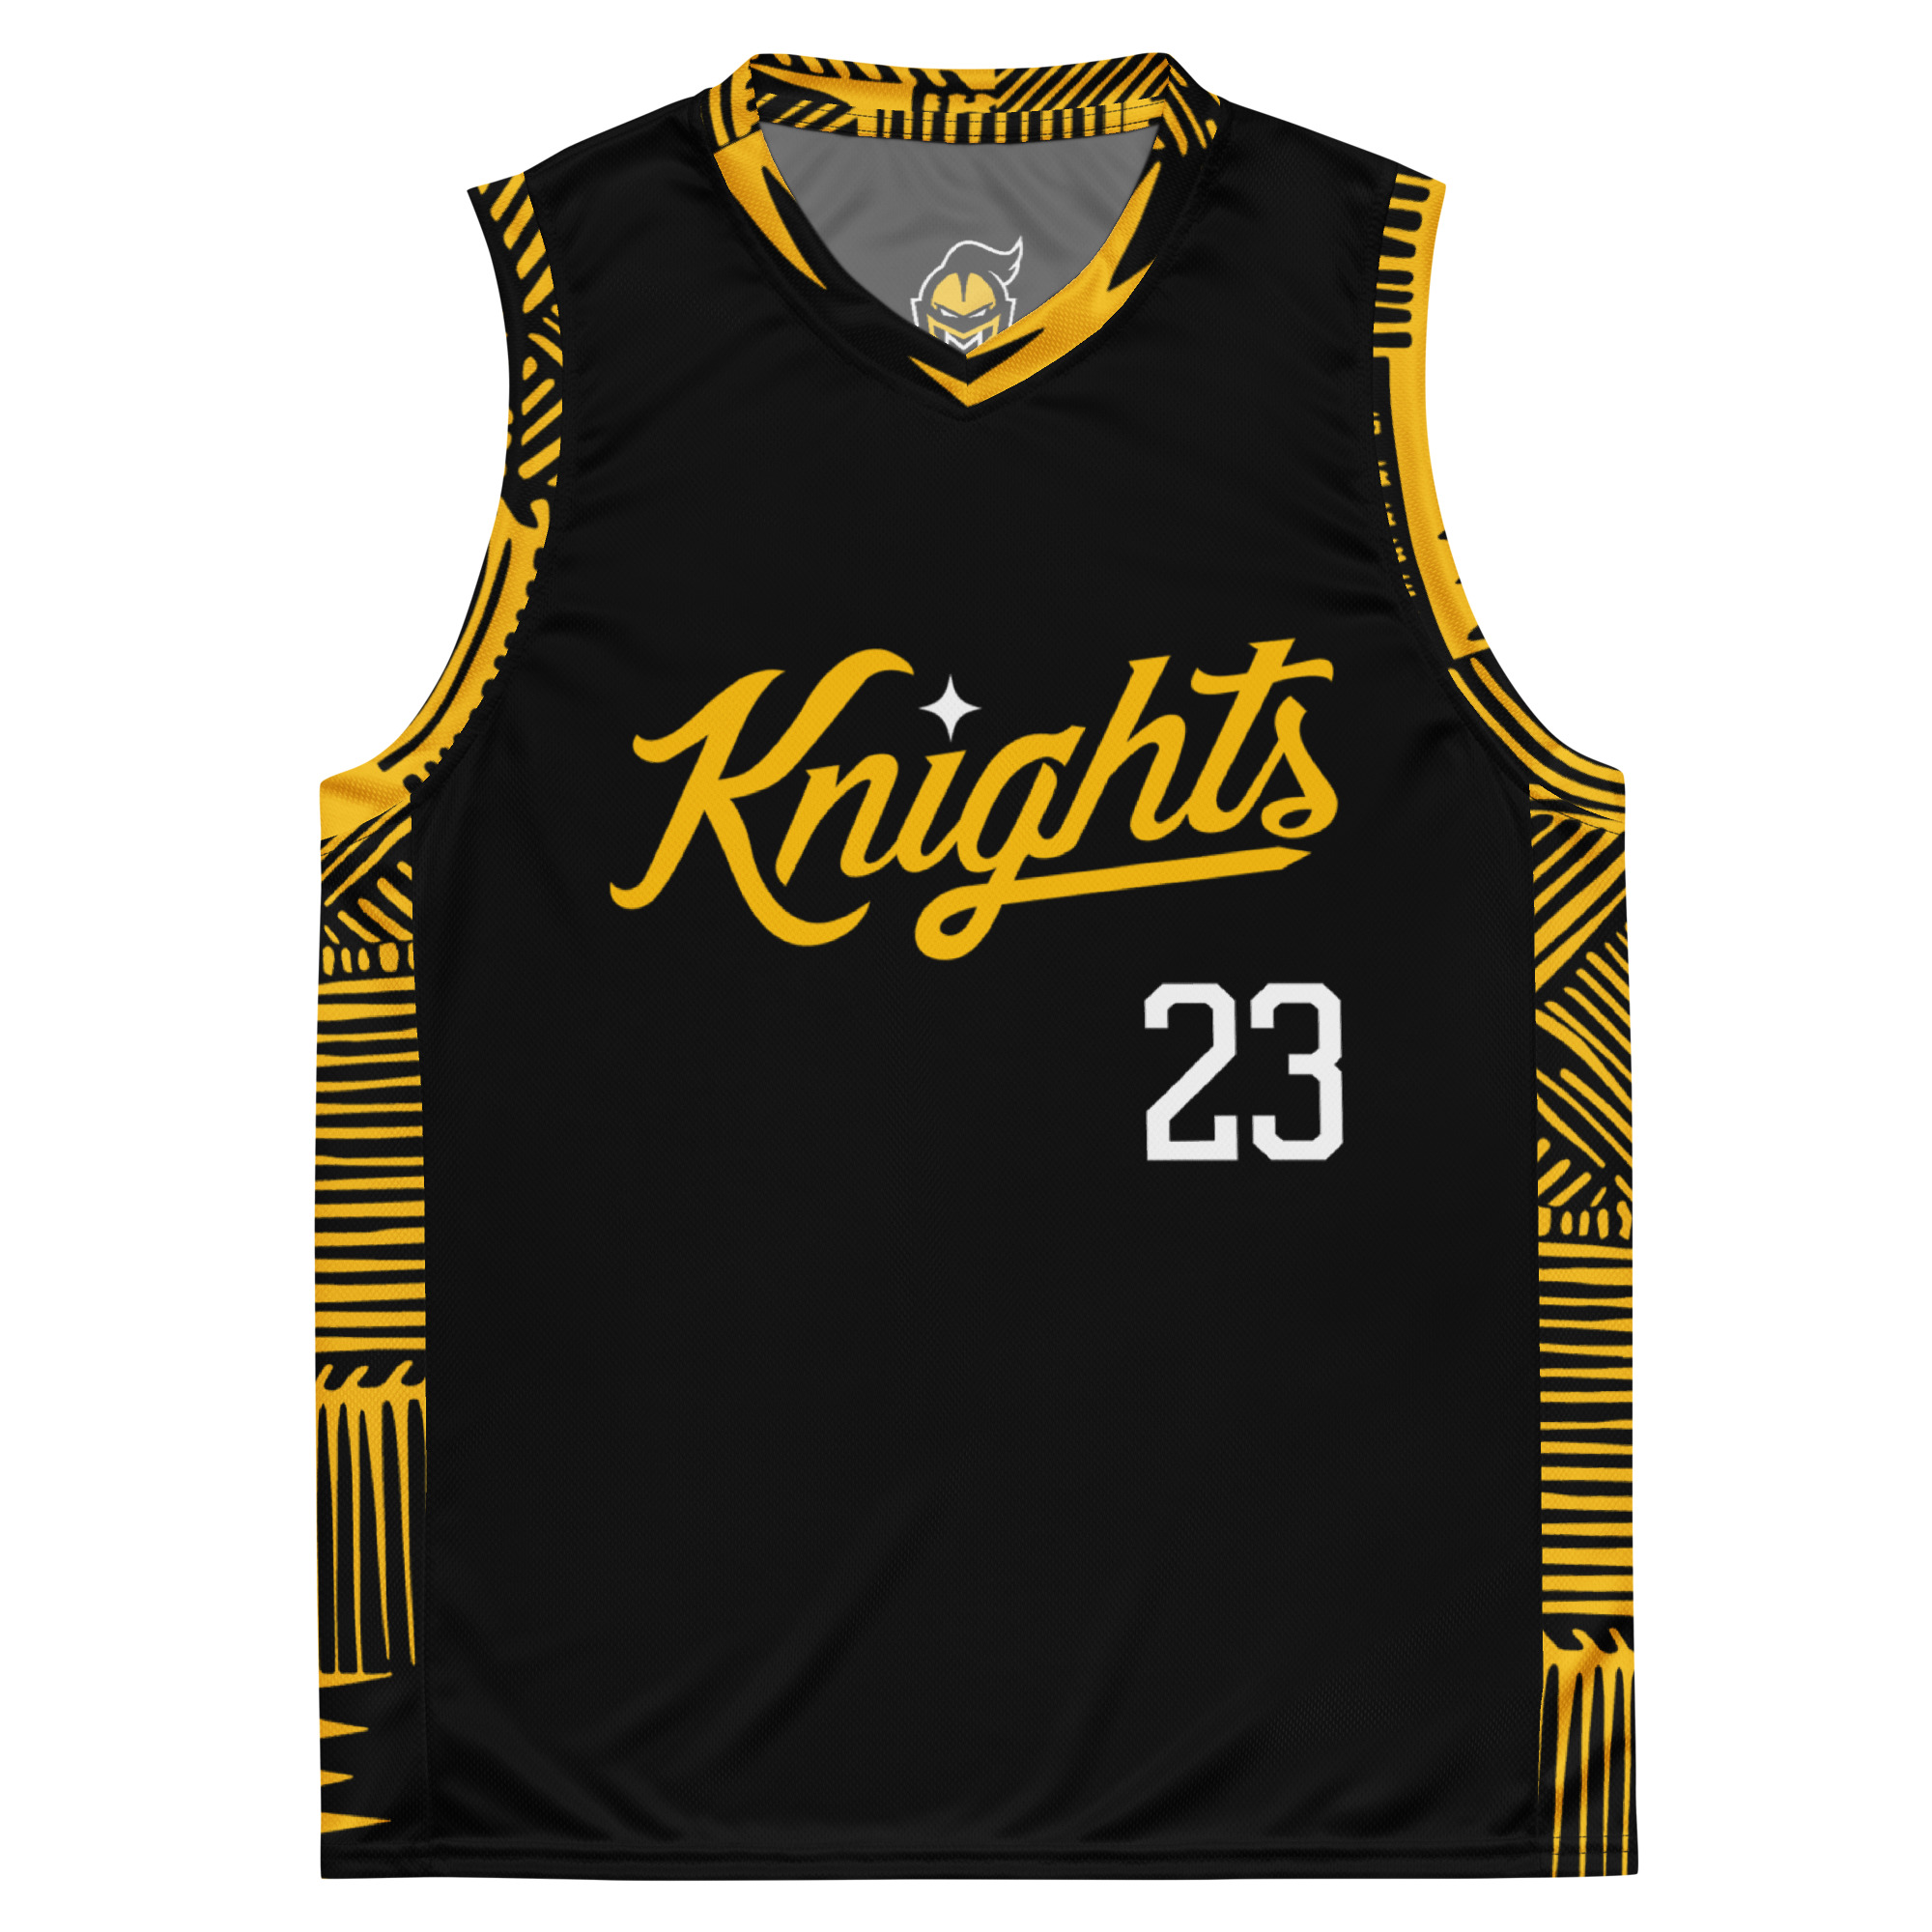 2023 Knights Night Jersey